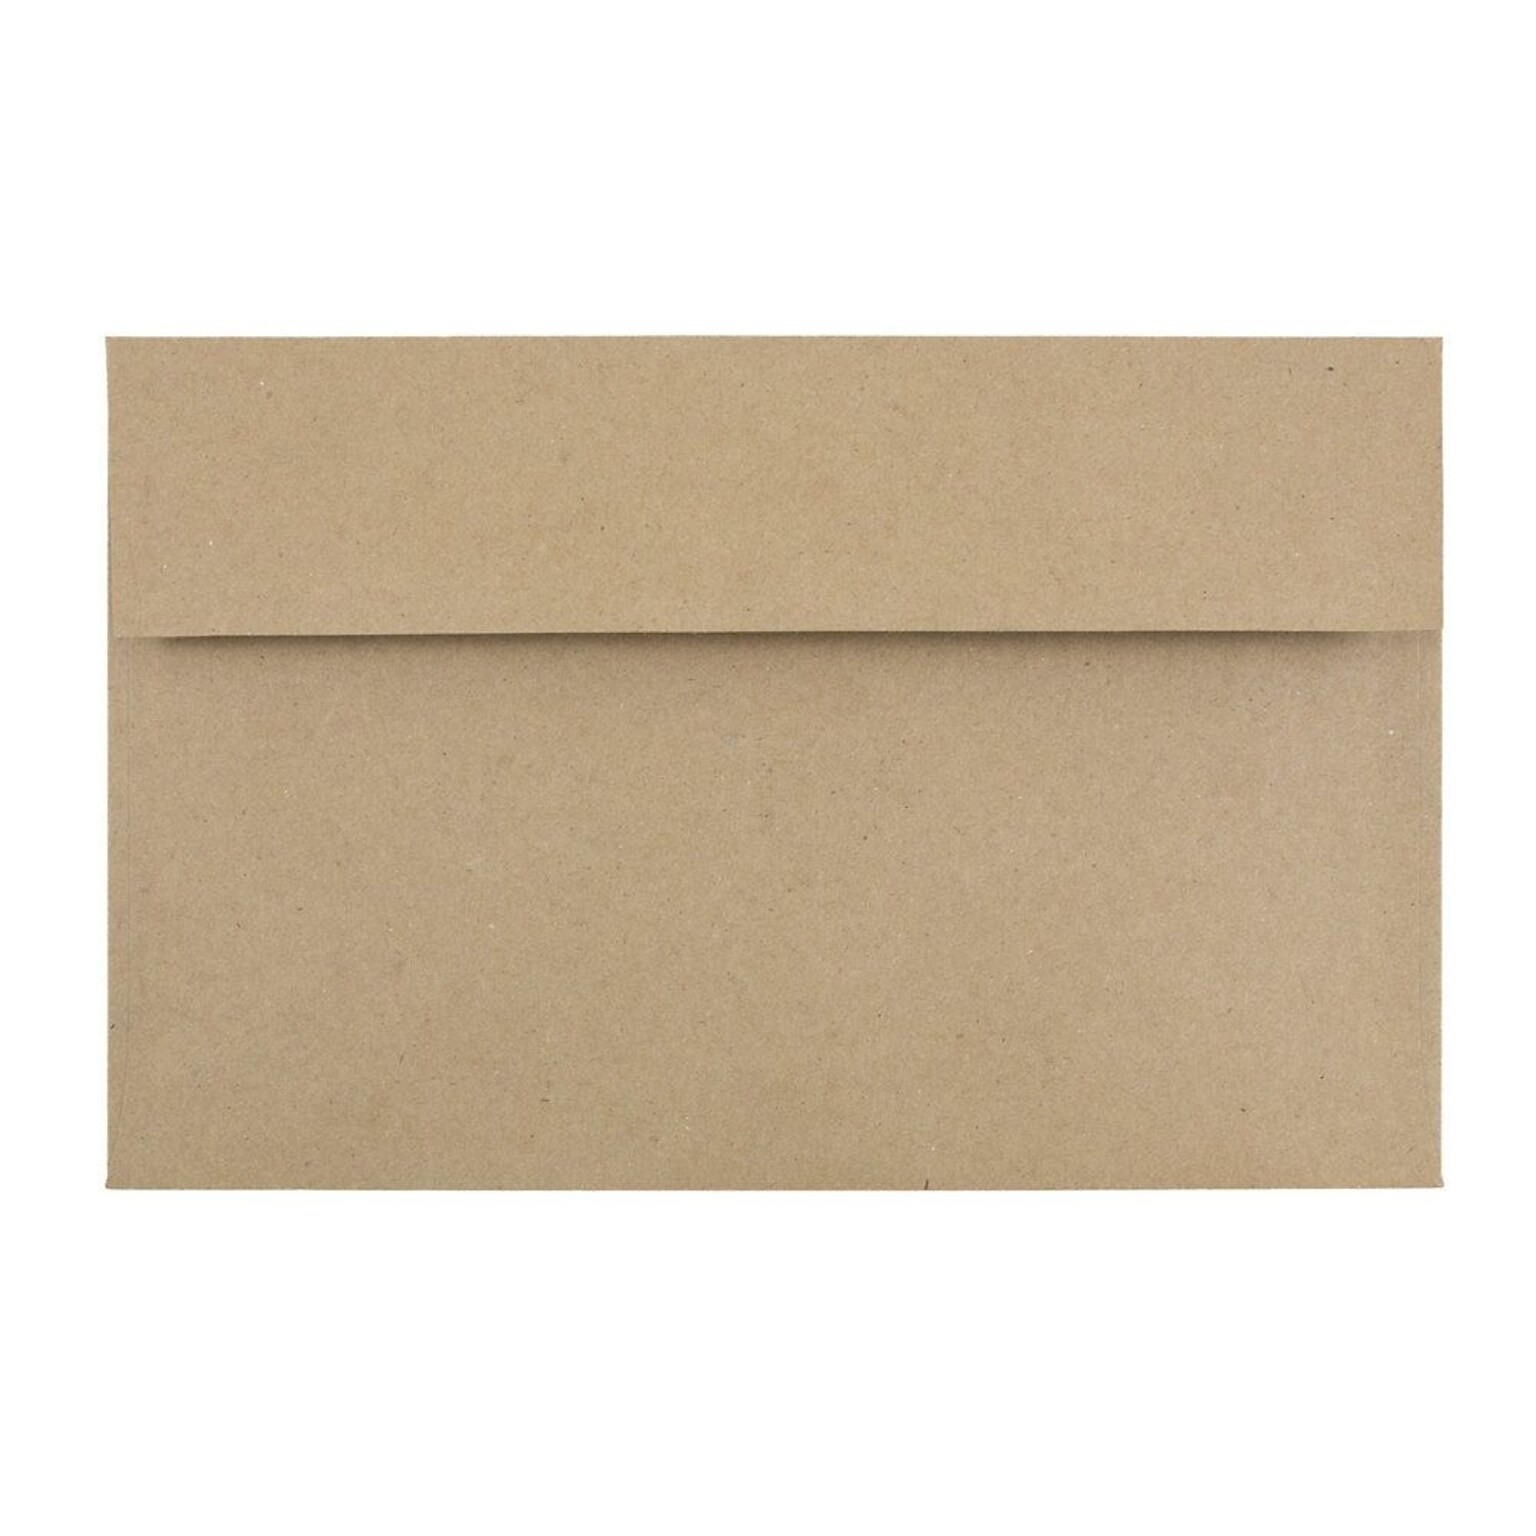 JAM Paper A10 Invitation Envelopes, 6 x 9.5, Brown Kraft Paper Bag, Bulk 250/Box (LEKR850H)